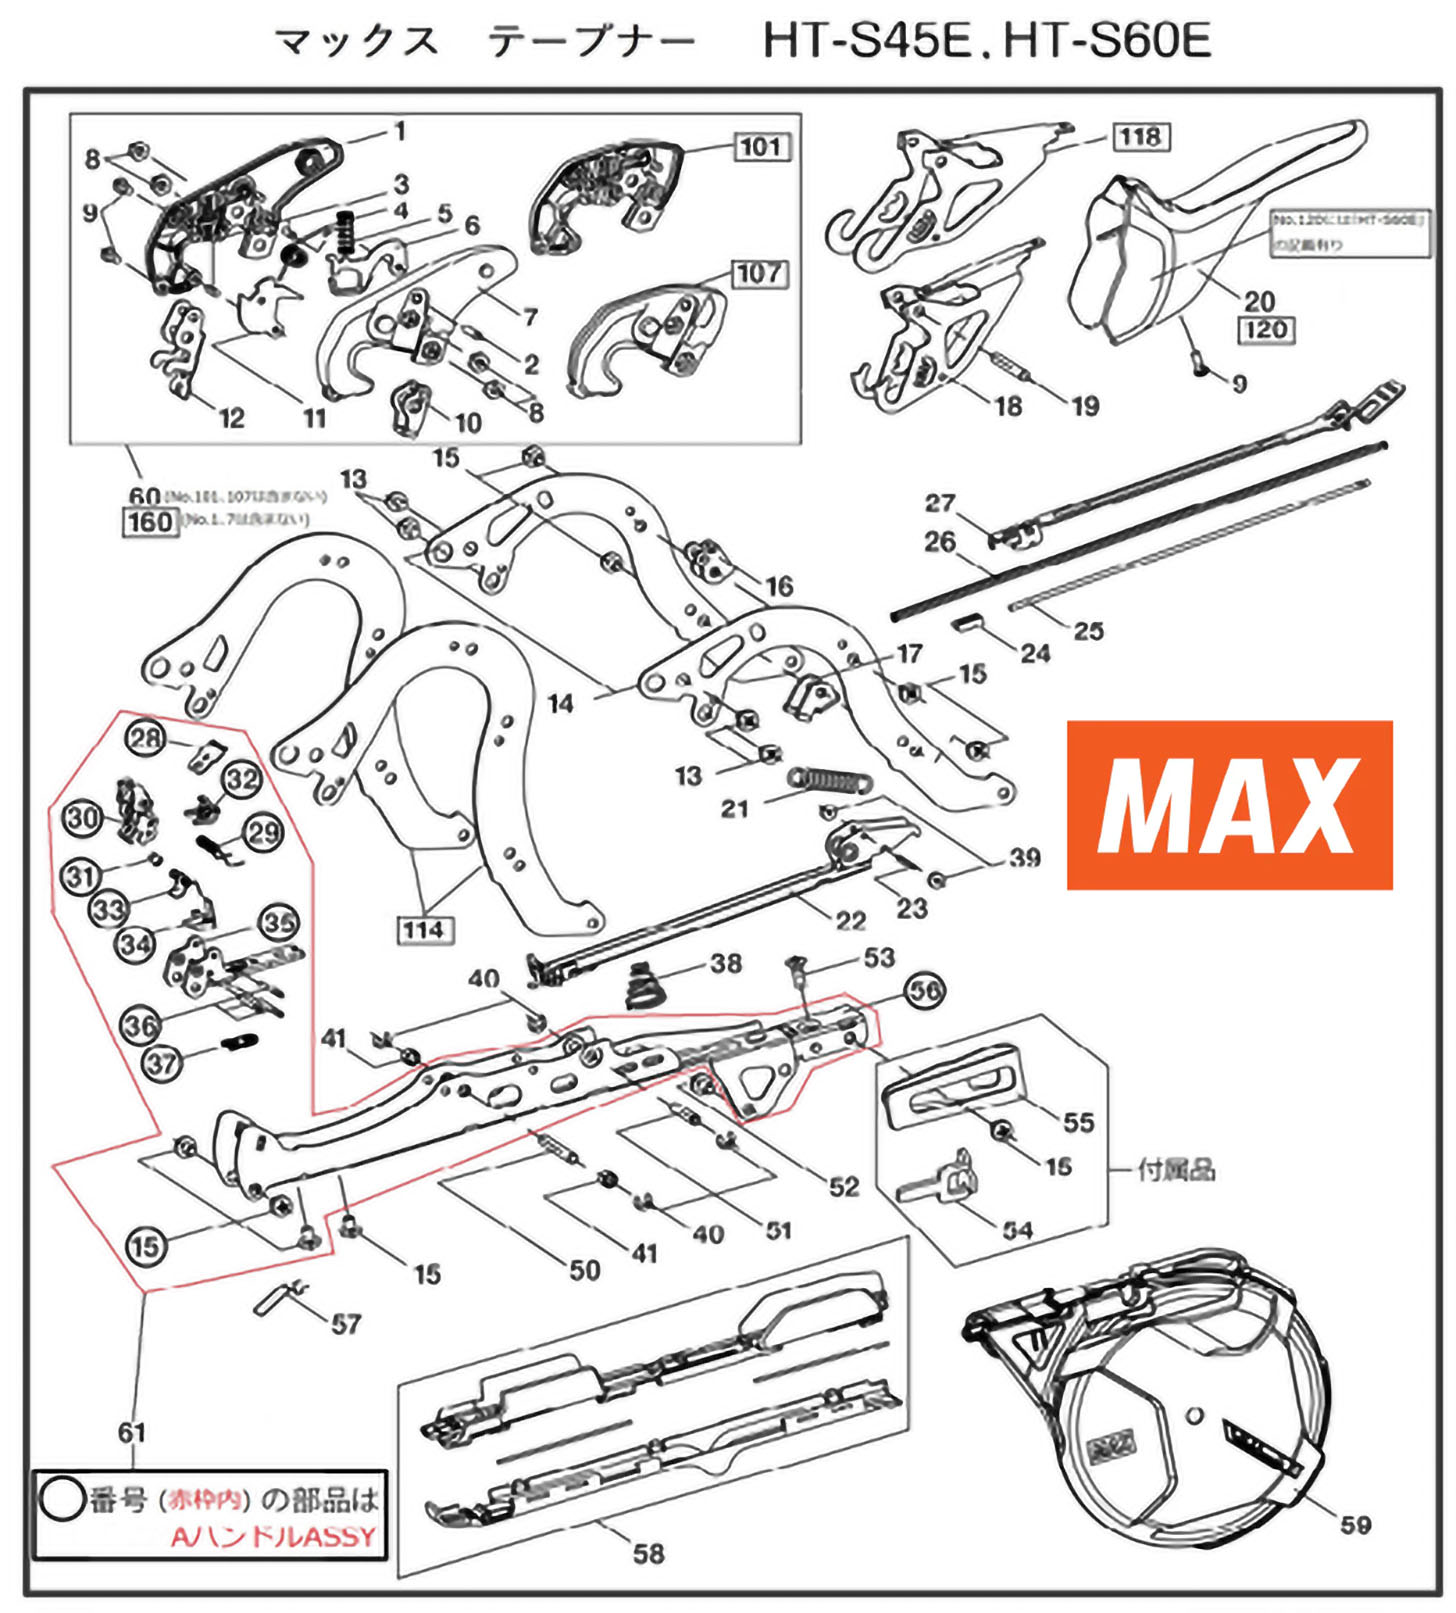 MAX Tapener Part HT81018 A HANDLE ASSY(HT-S) Fits MAX HT-S45E #61